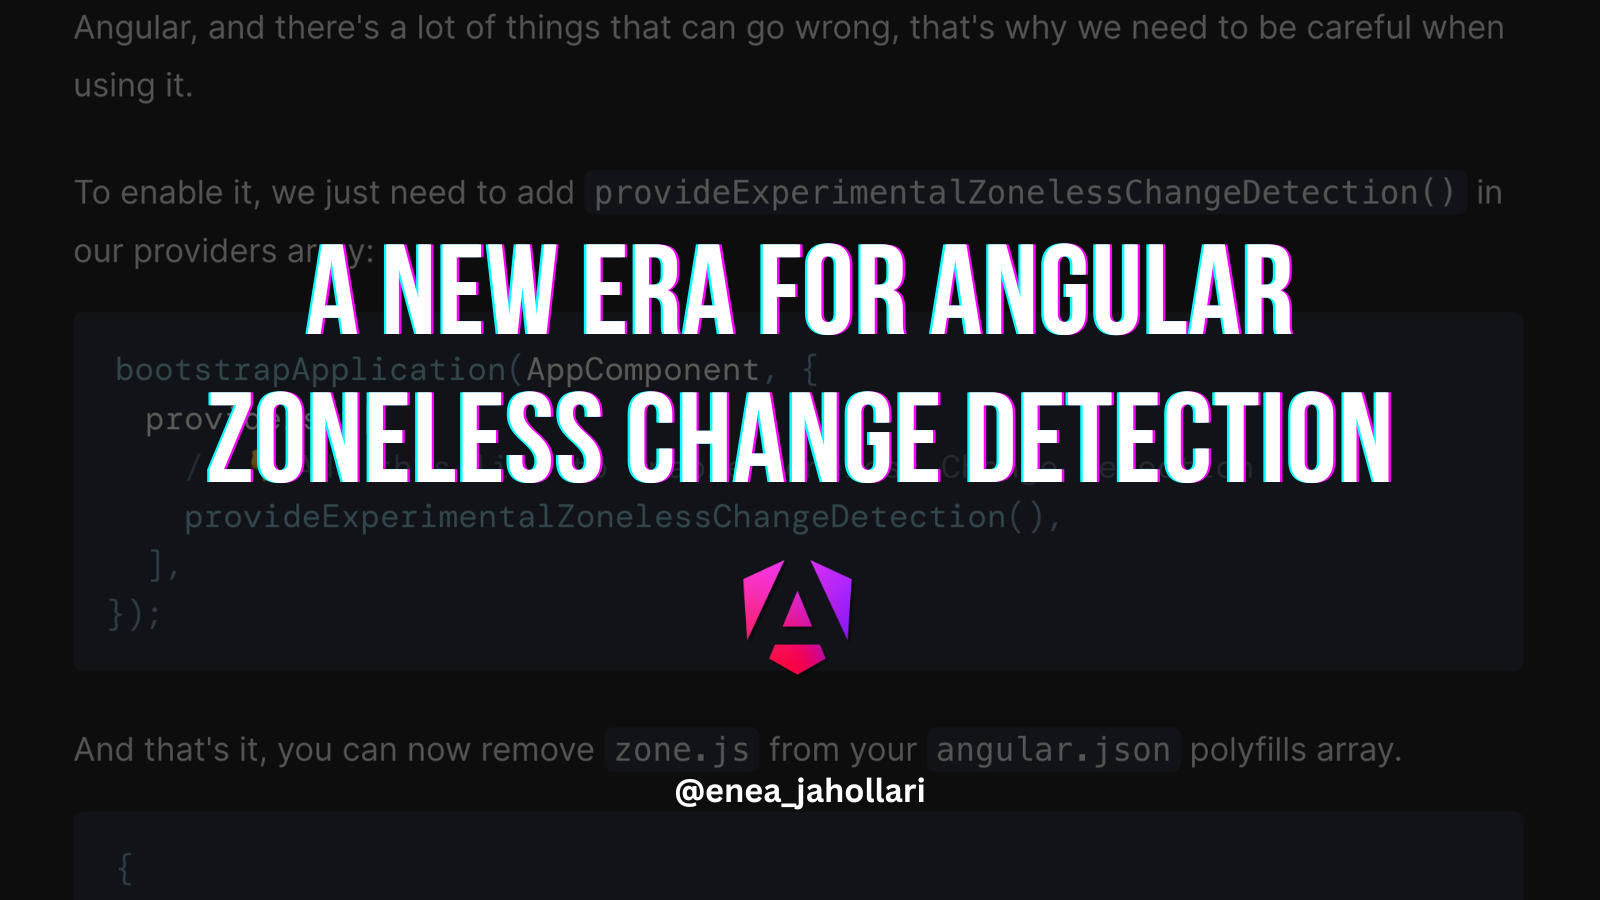  A new era for Angular - Zoneless Change Detection